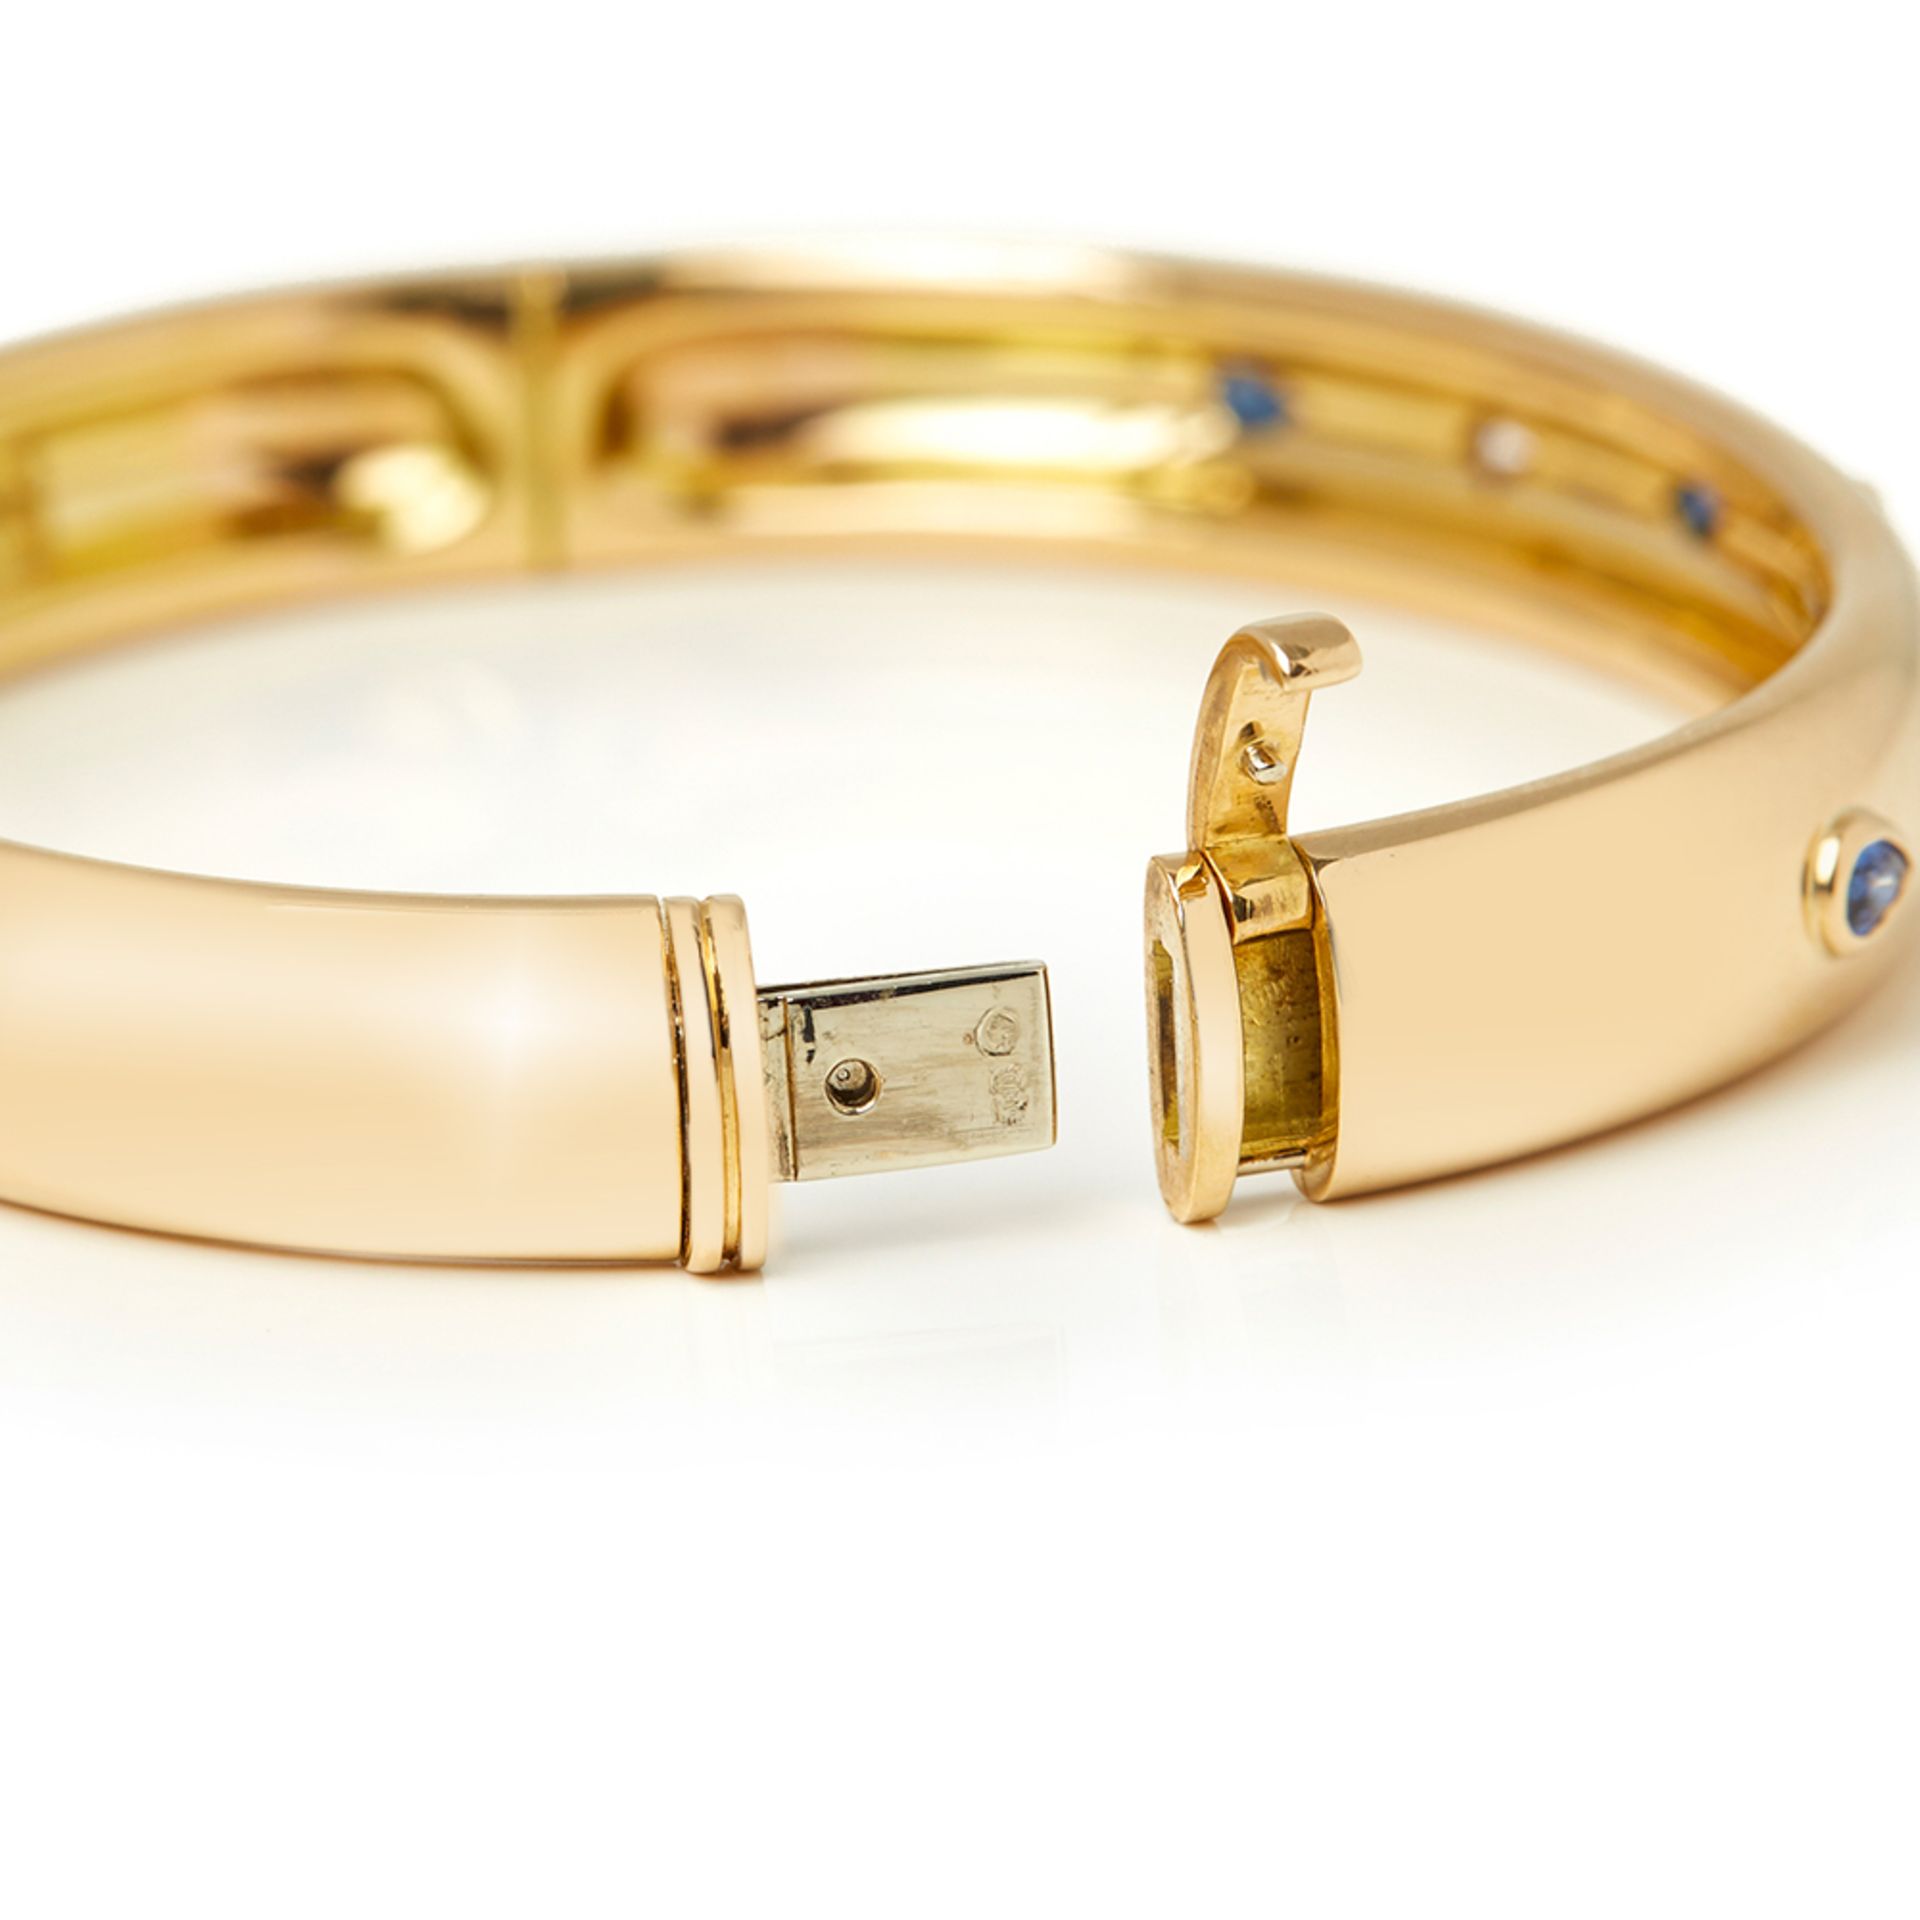 Cartier 18k Yellow Gold Sapphire & Diamond Cuff Bracelet - Image 3 of 7